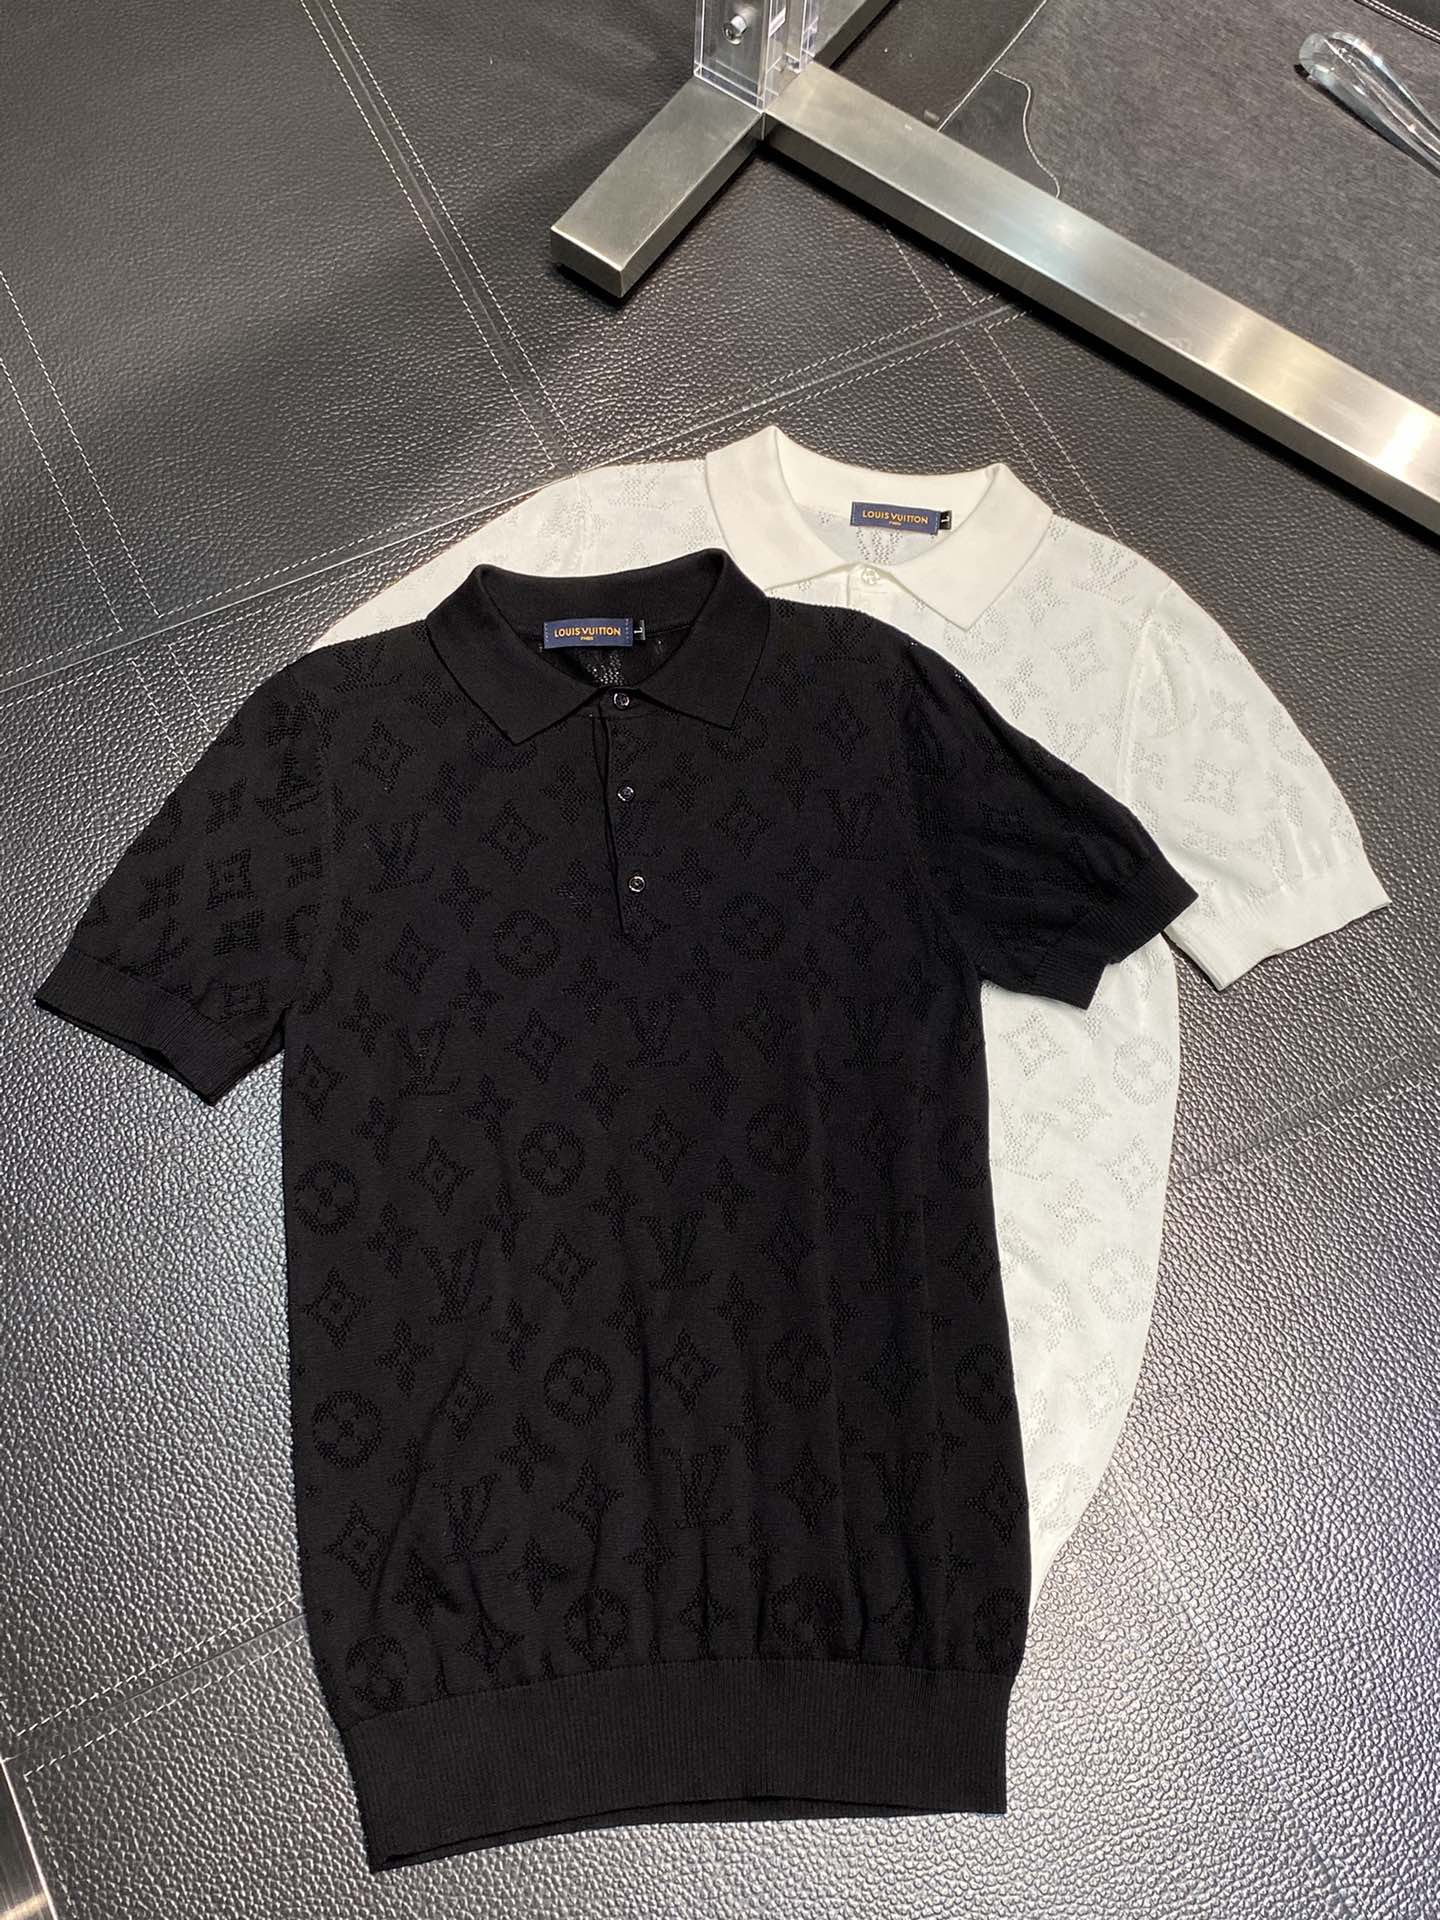 Louis Vuitton Clothing Polo T-Shirt Men Knitting Fashion Short Sleeve